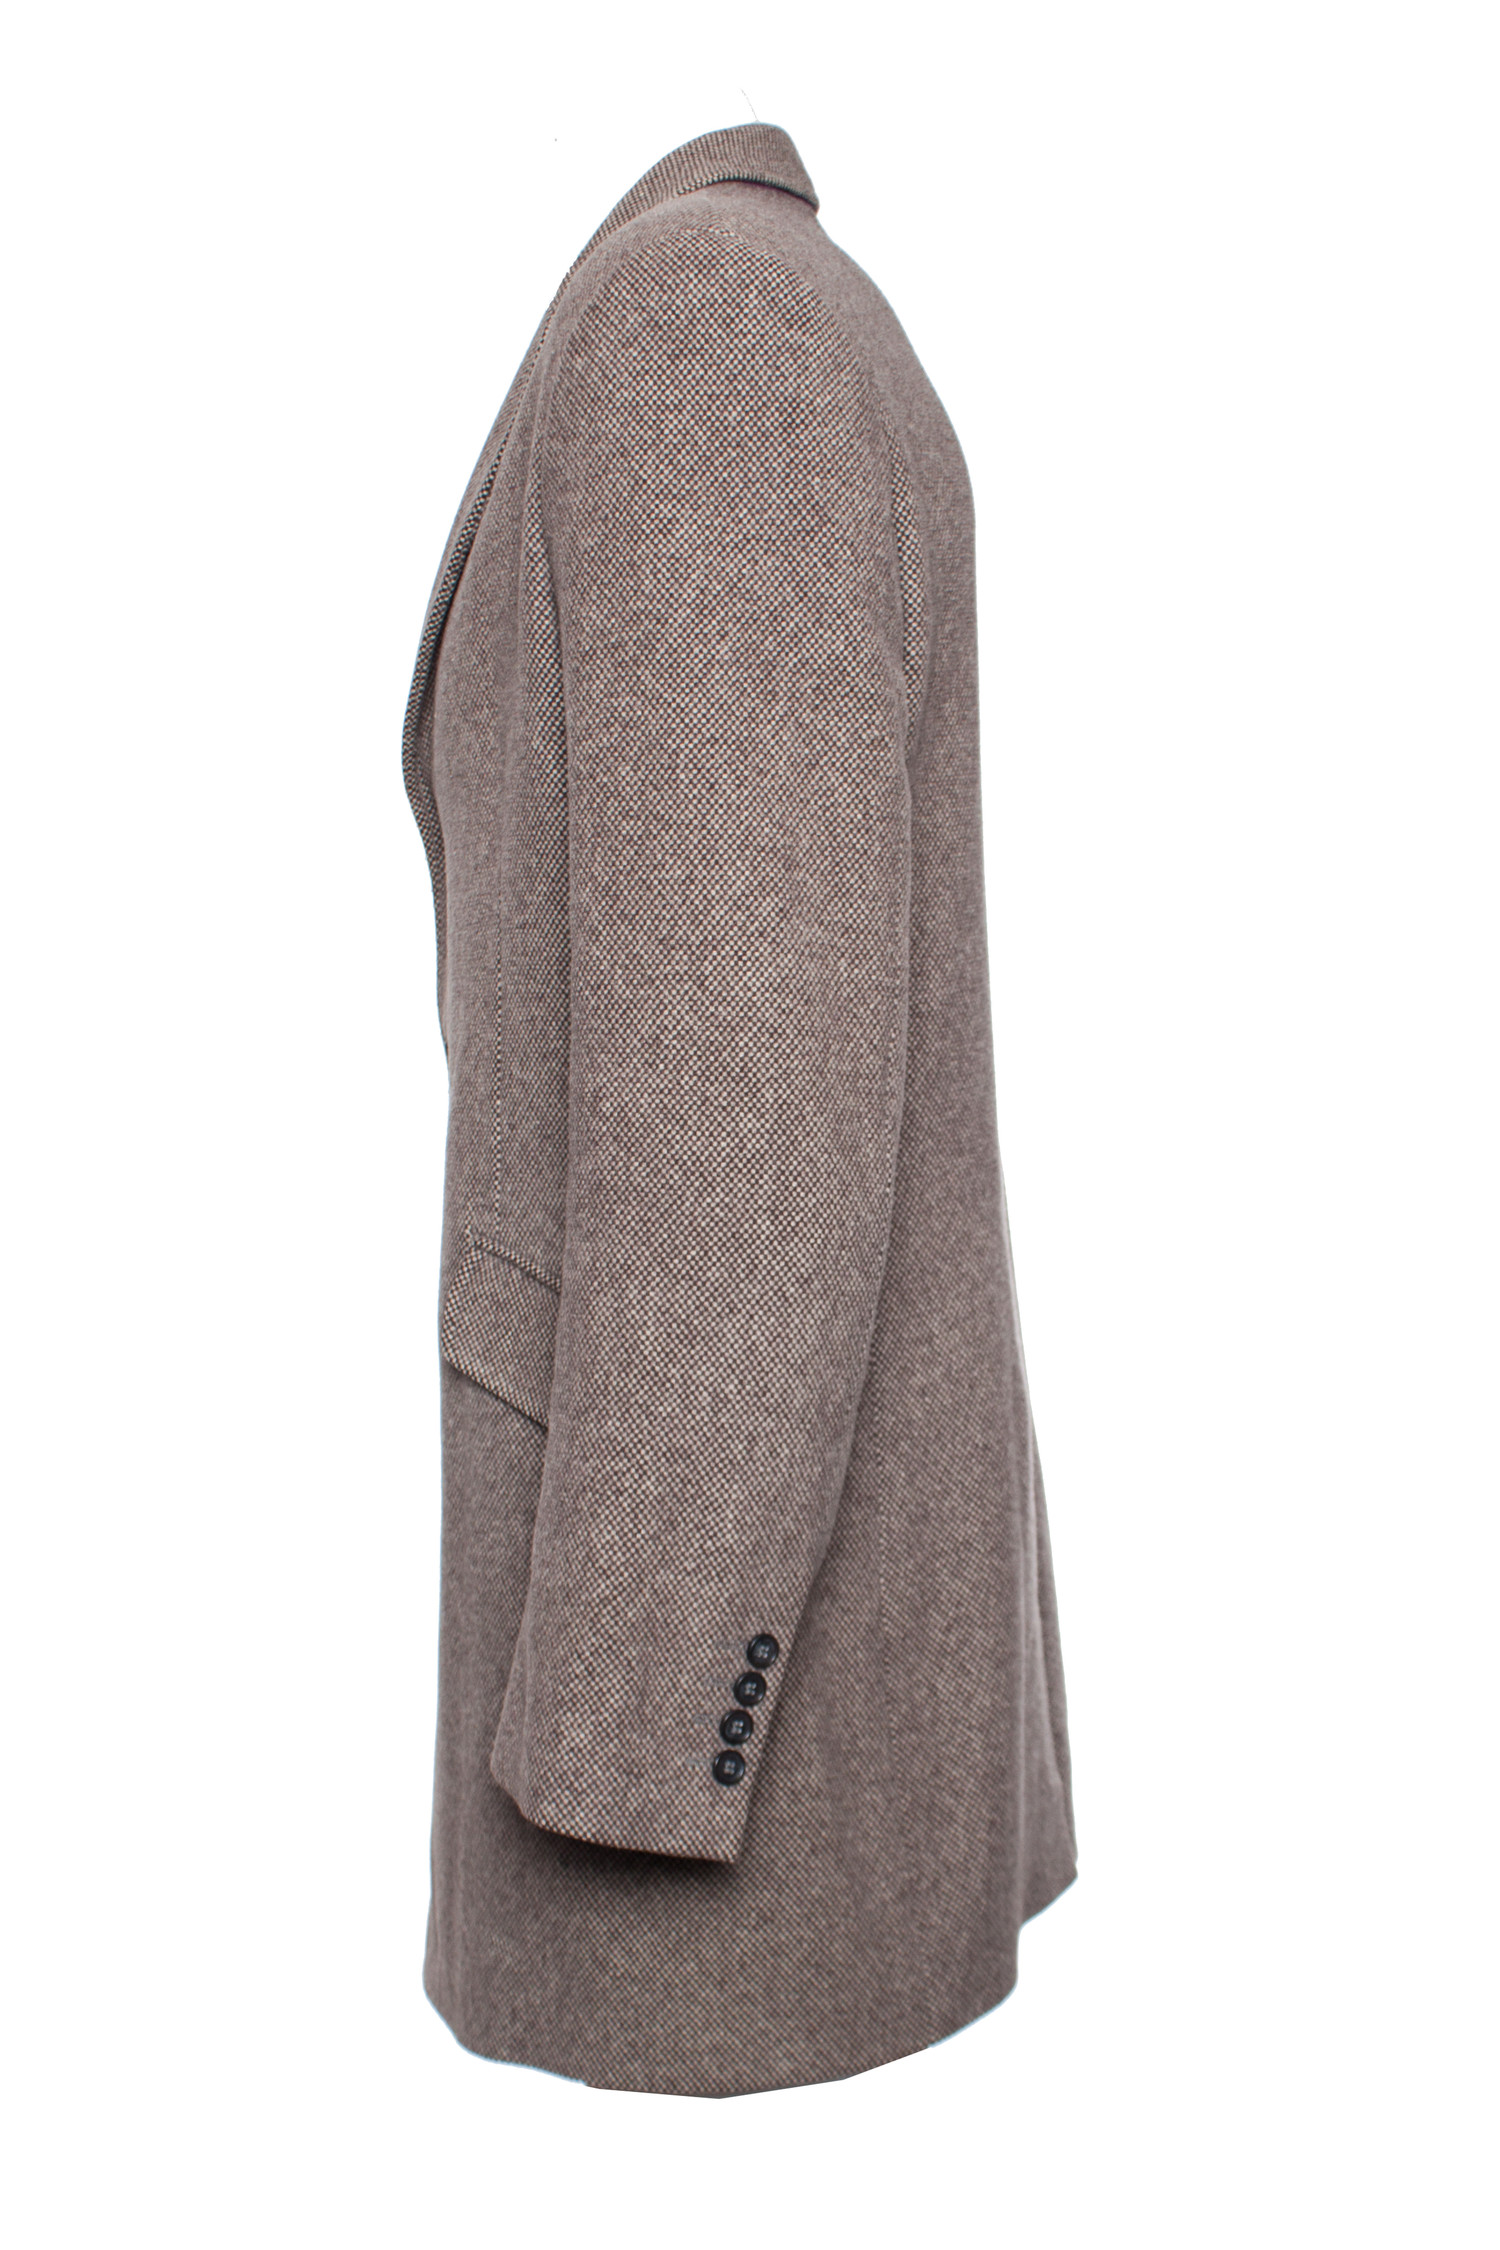 Dolce & Gabbana, Beige/brown blazer coat in size IT50/L. - Unique ...